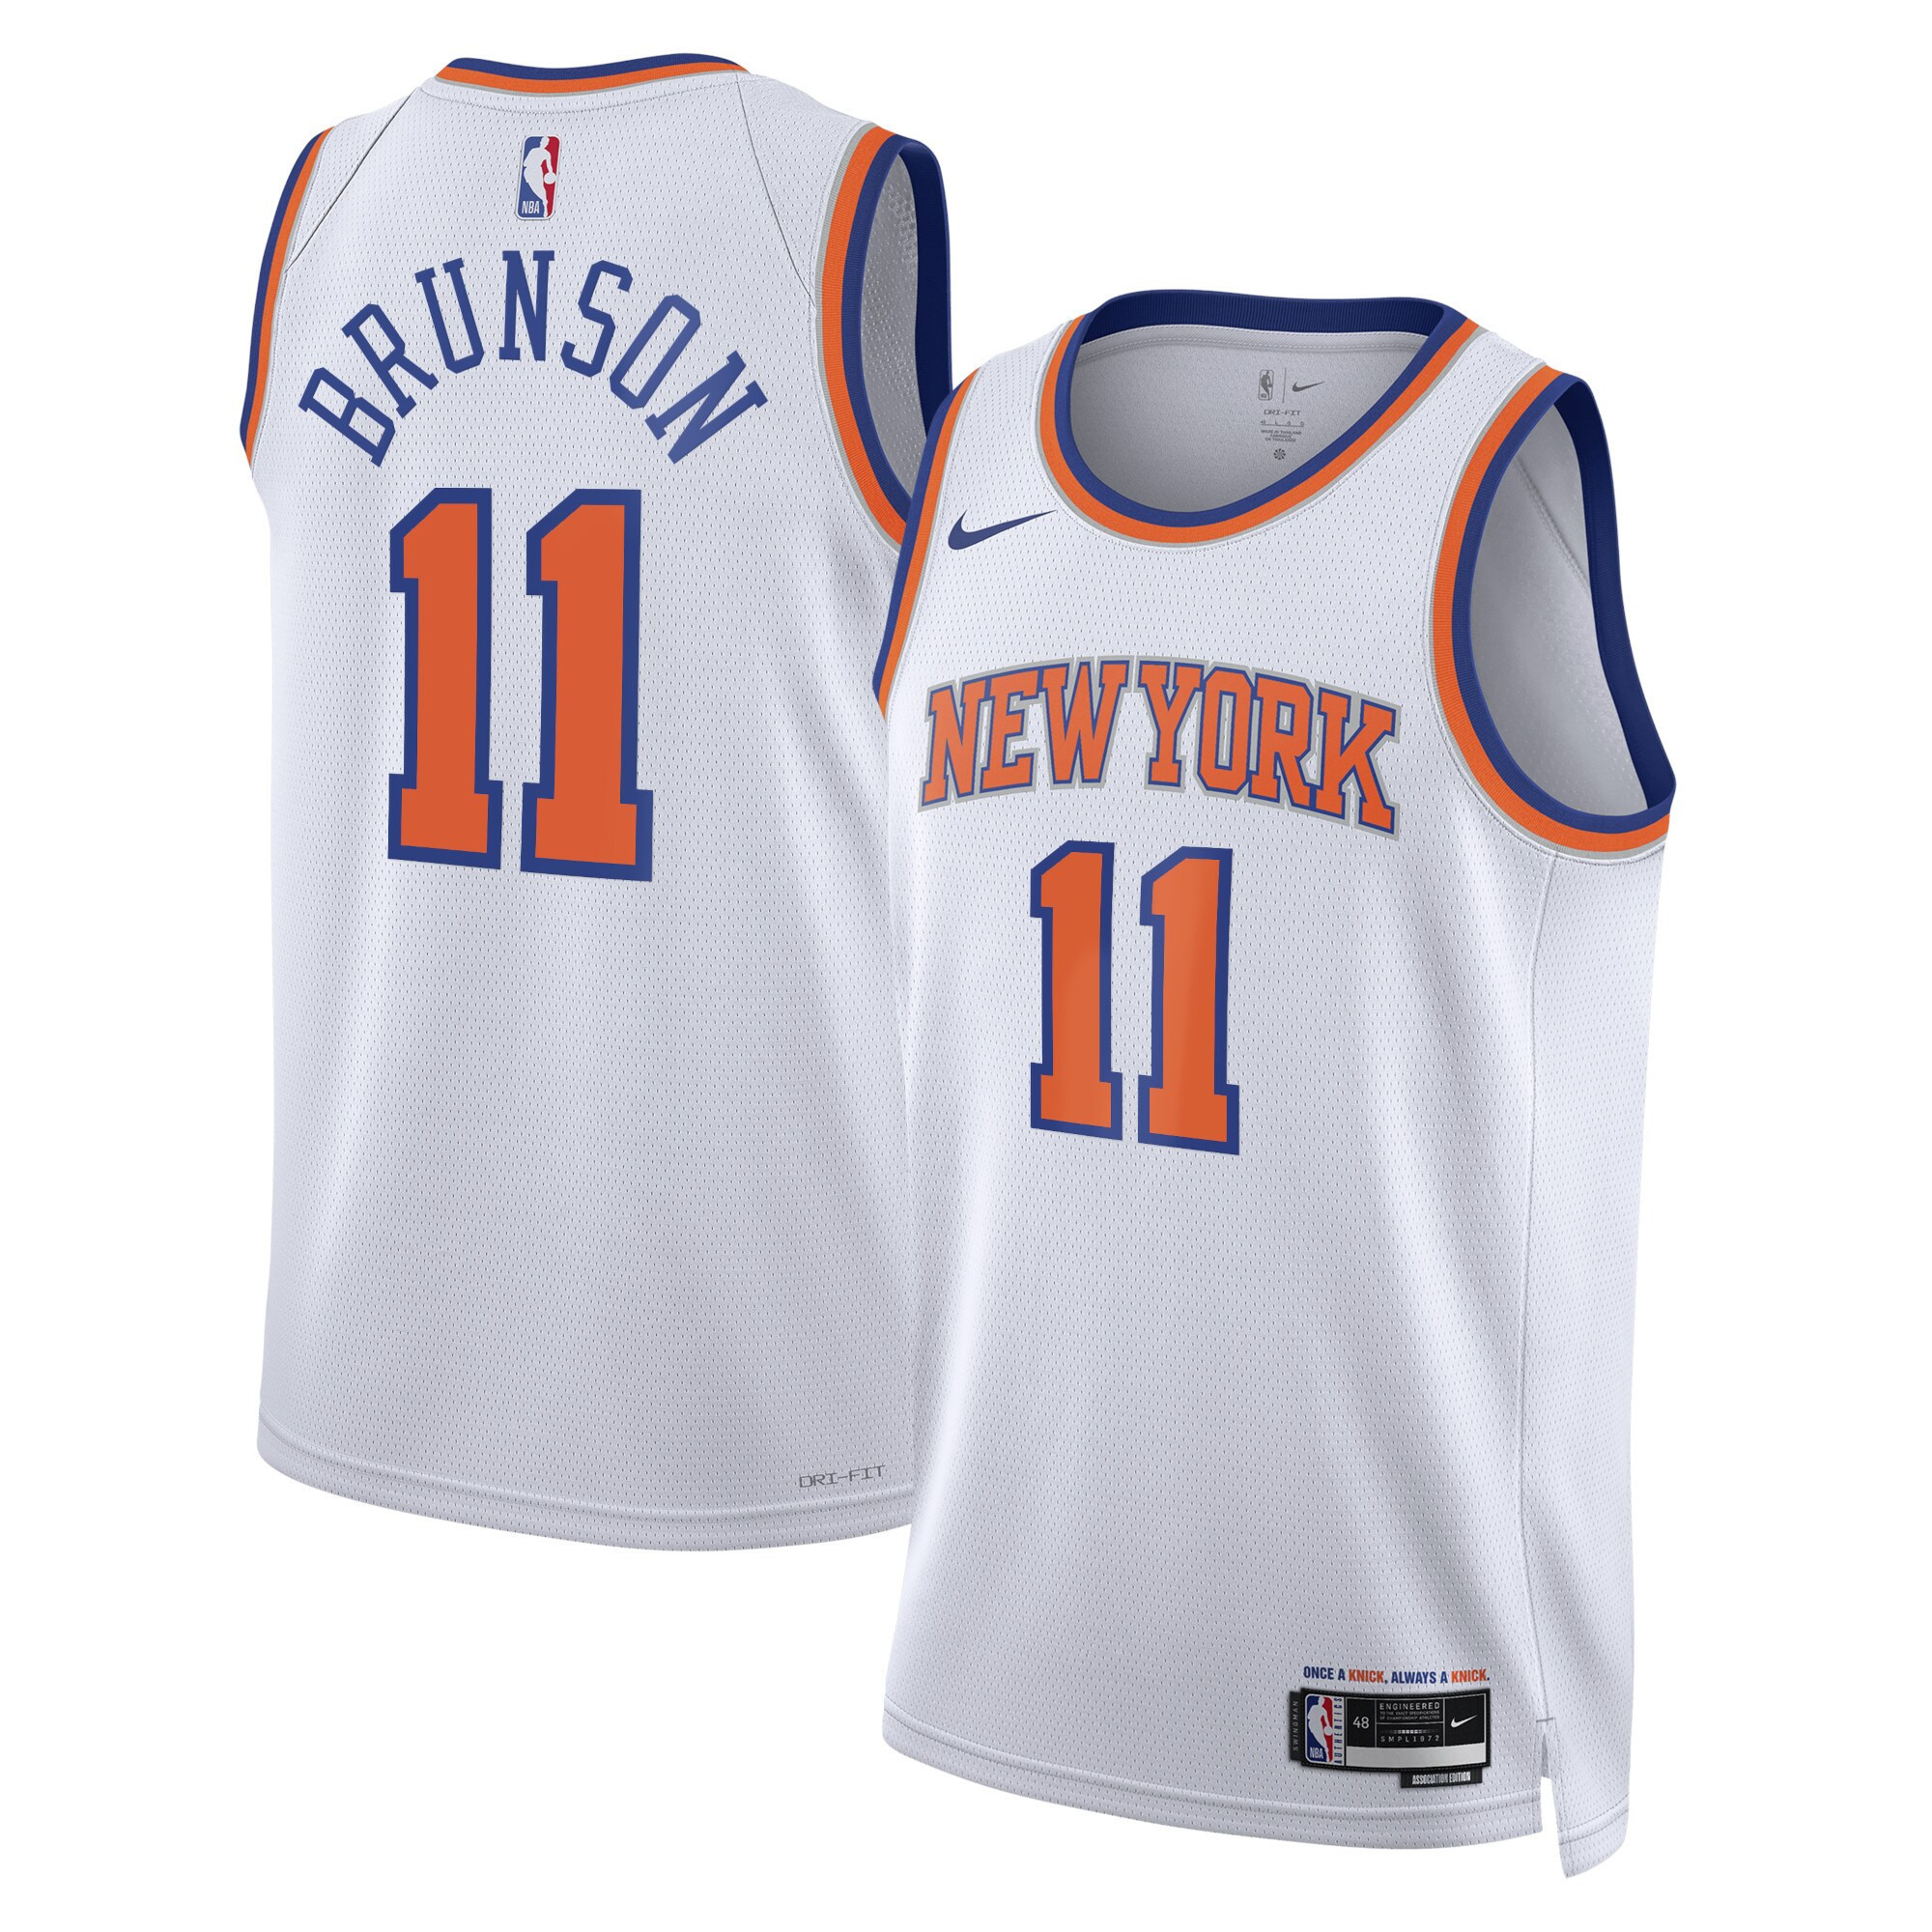 Jalen Brunson New York Knicks White Jersey - All Stitched